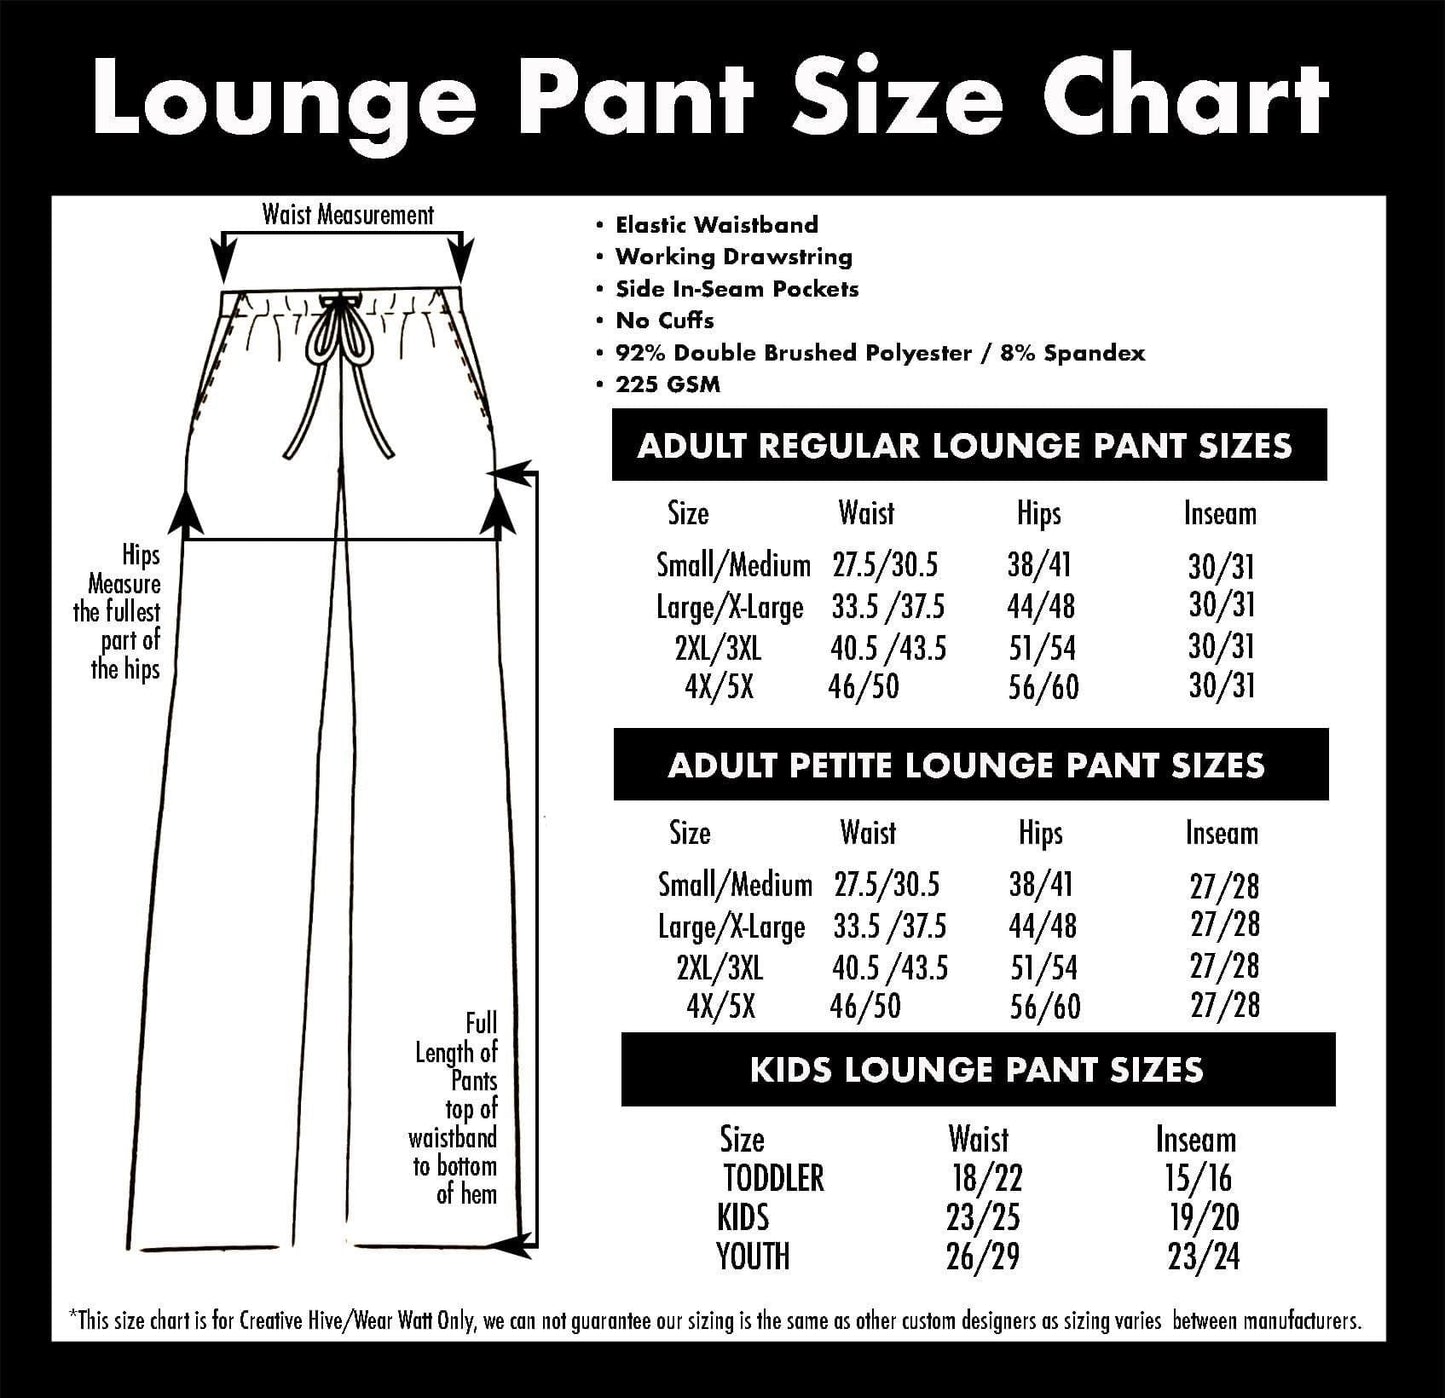 Opposites Lounge Pants